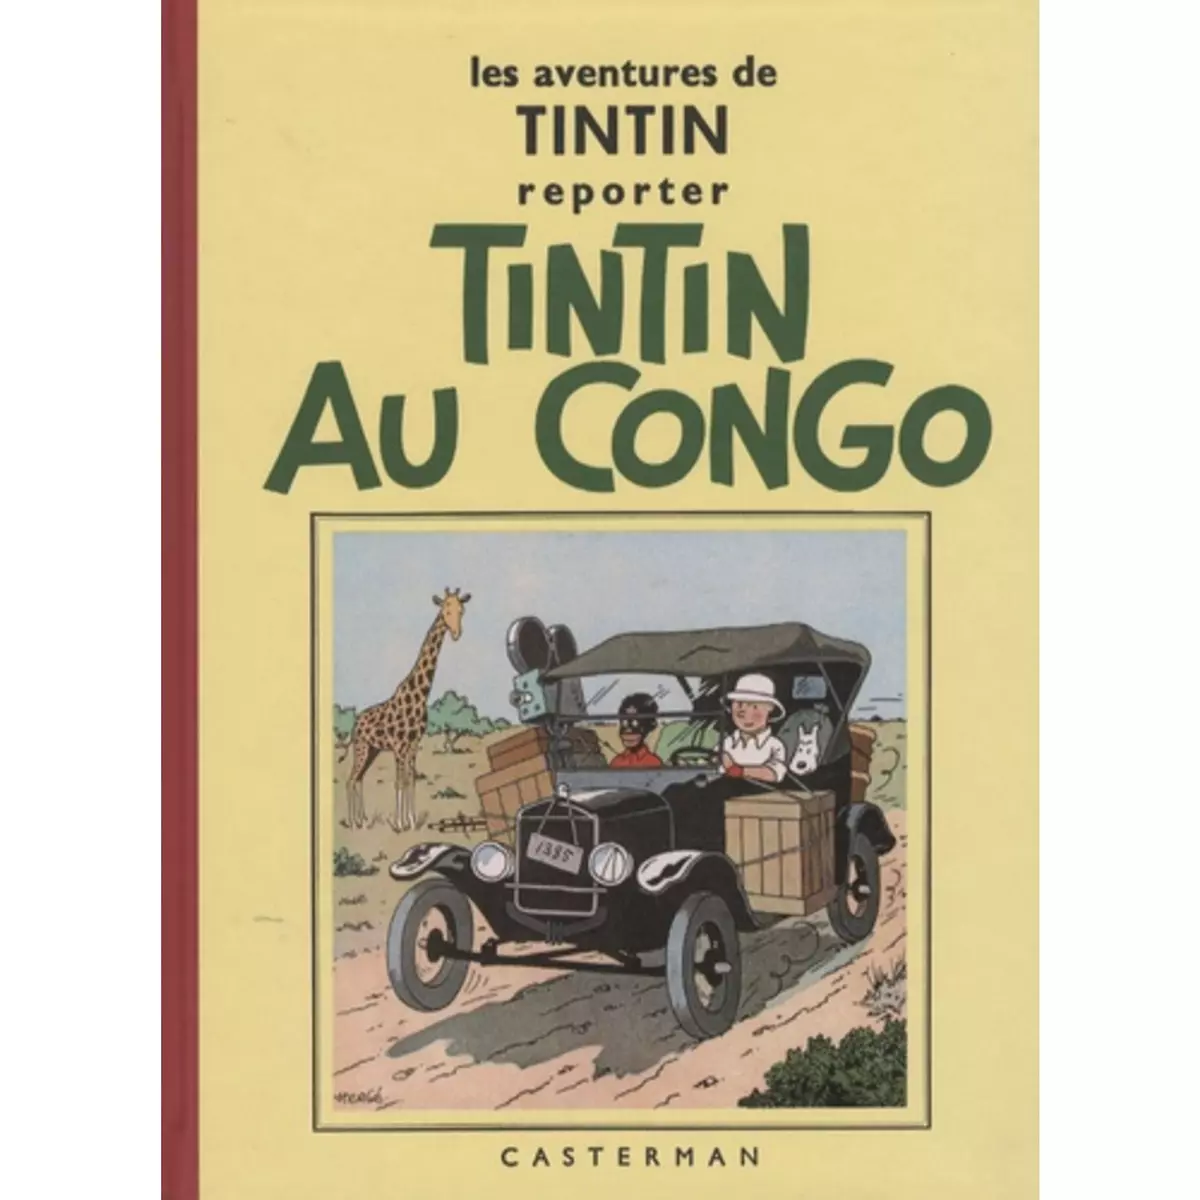  LES AVENTURES DE TINTIN REPORTER : TINTIN AU CONGO, Hergé